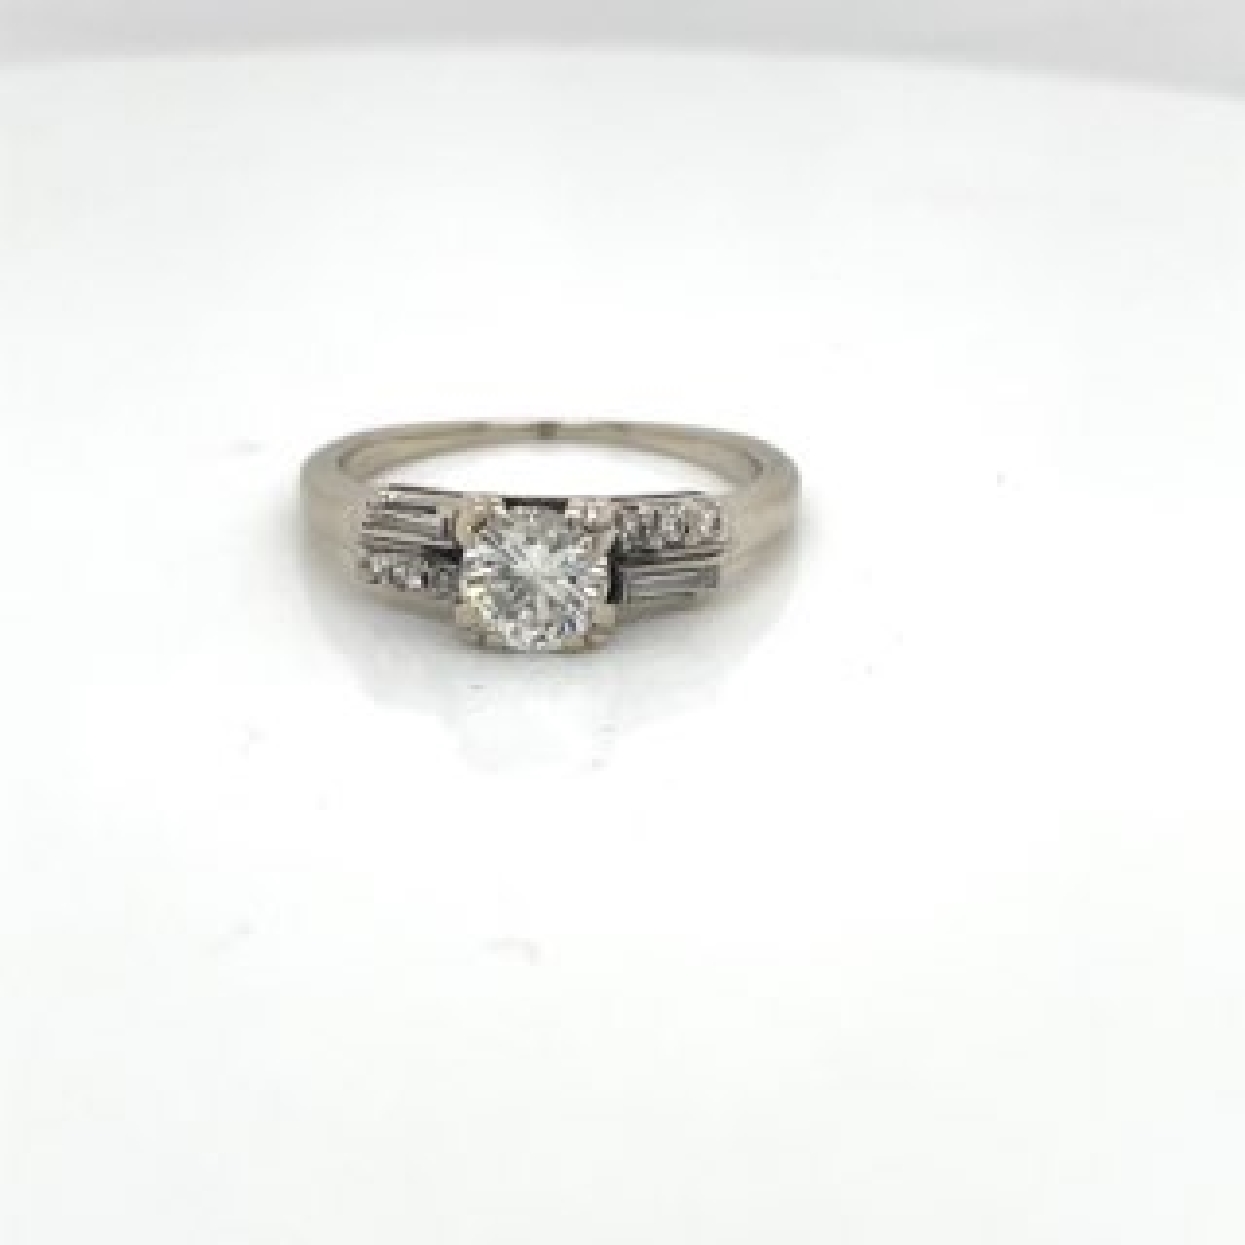 14K White Gold Antique Engagement Ring

Size 5.25